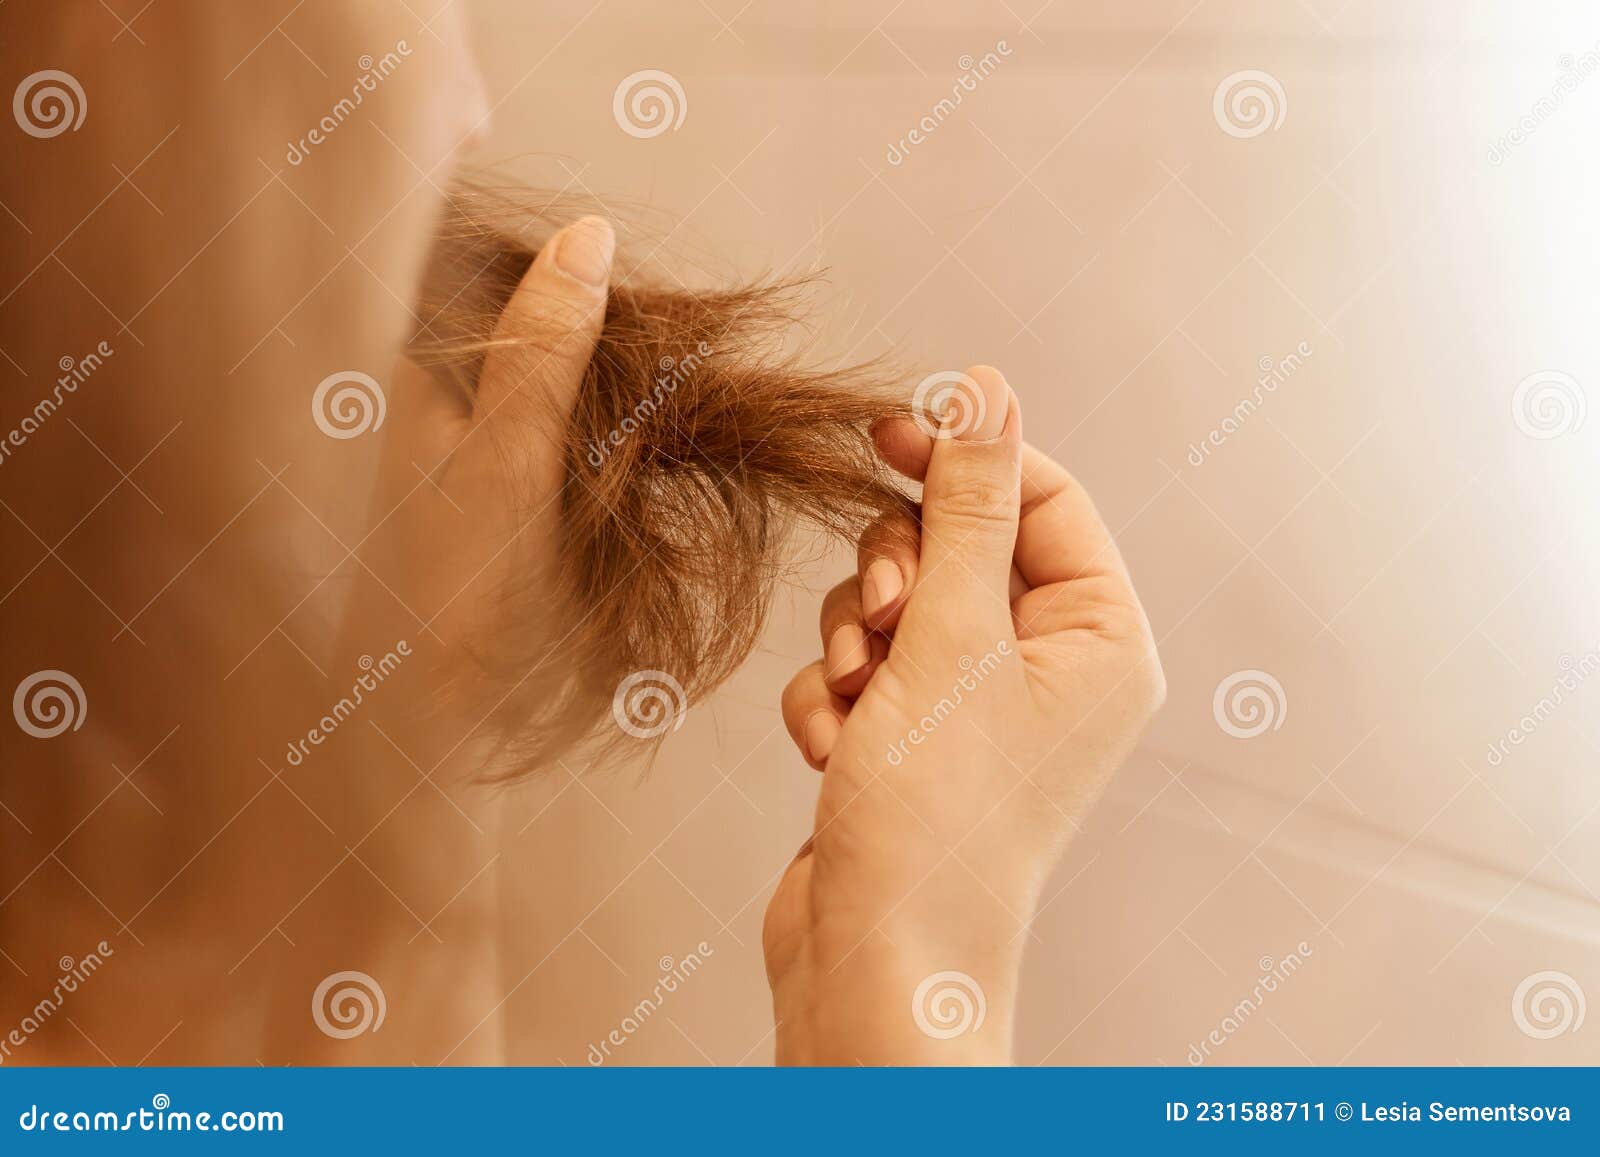 closeup portrait of woman hands holding dry damaged hair eds, having trichology problem